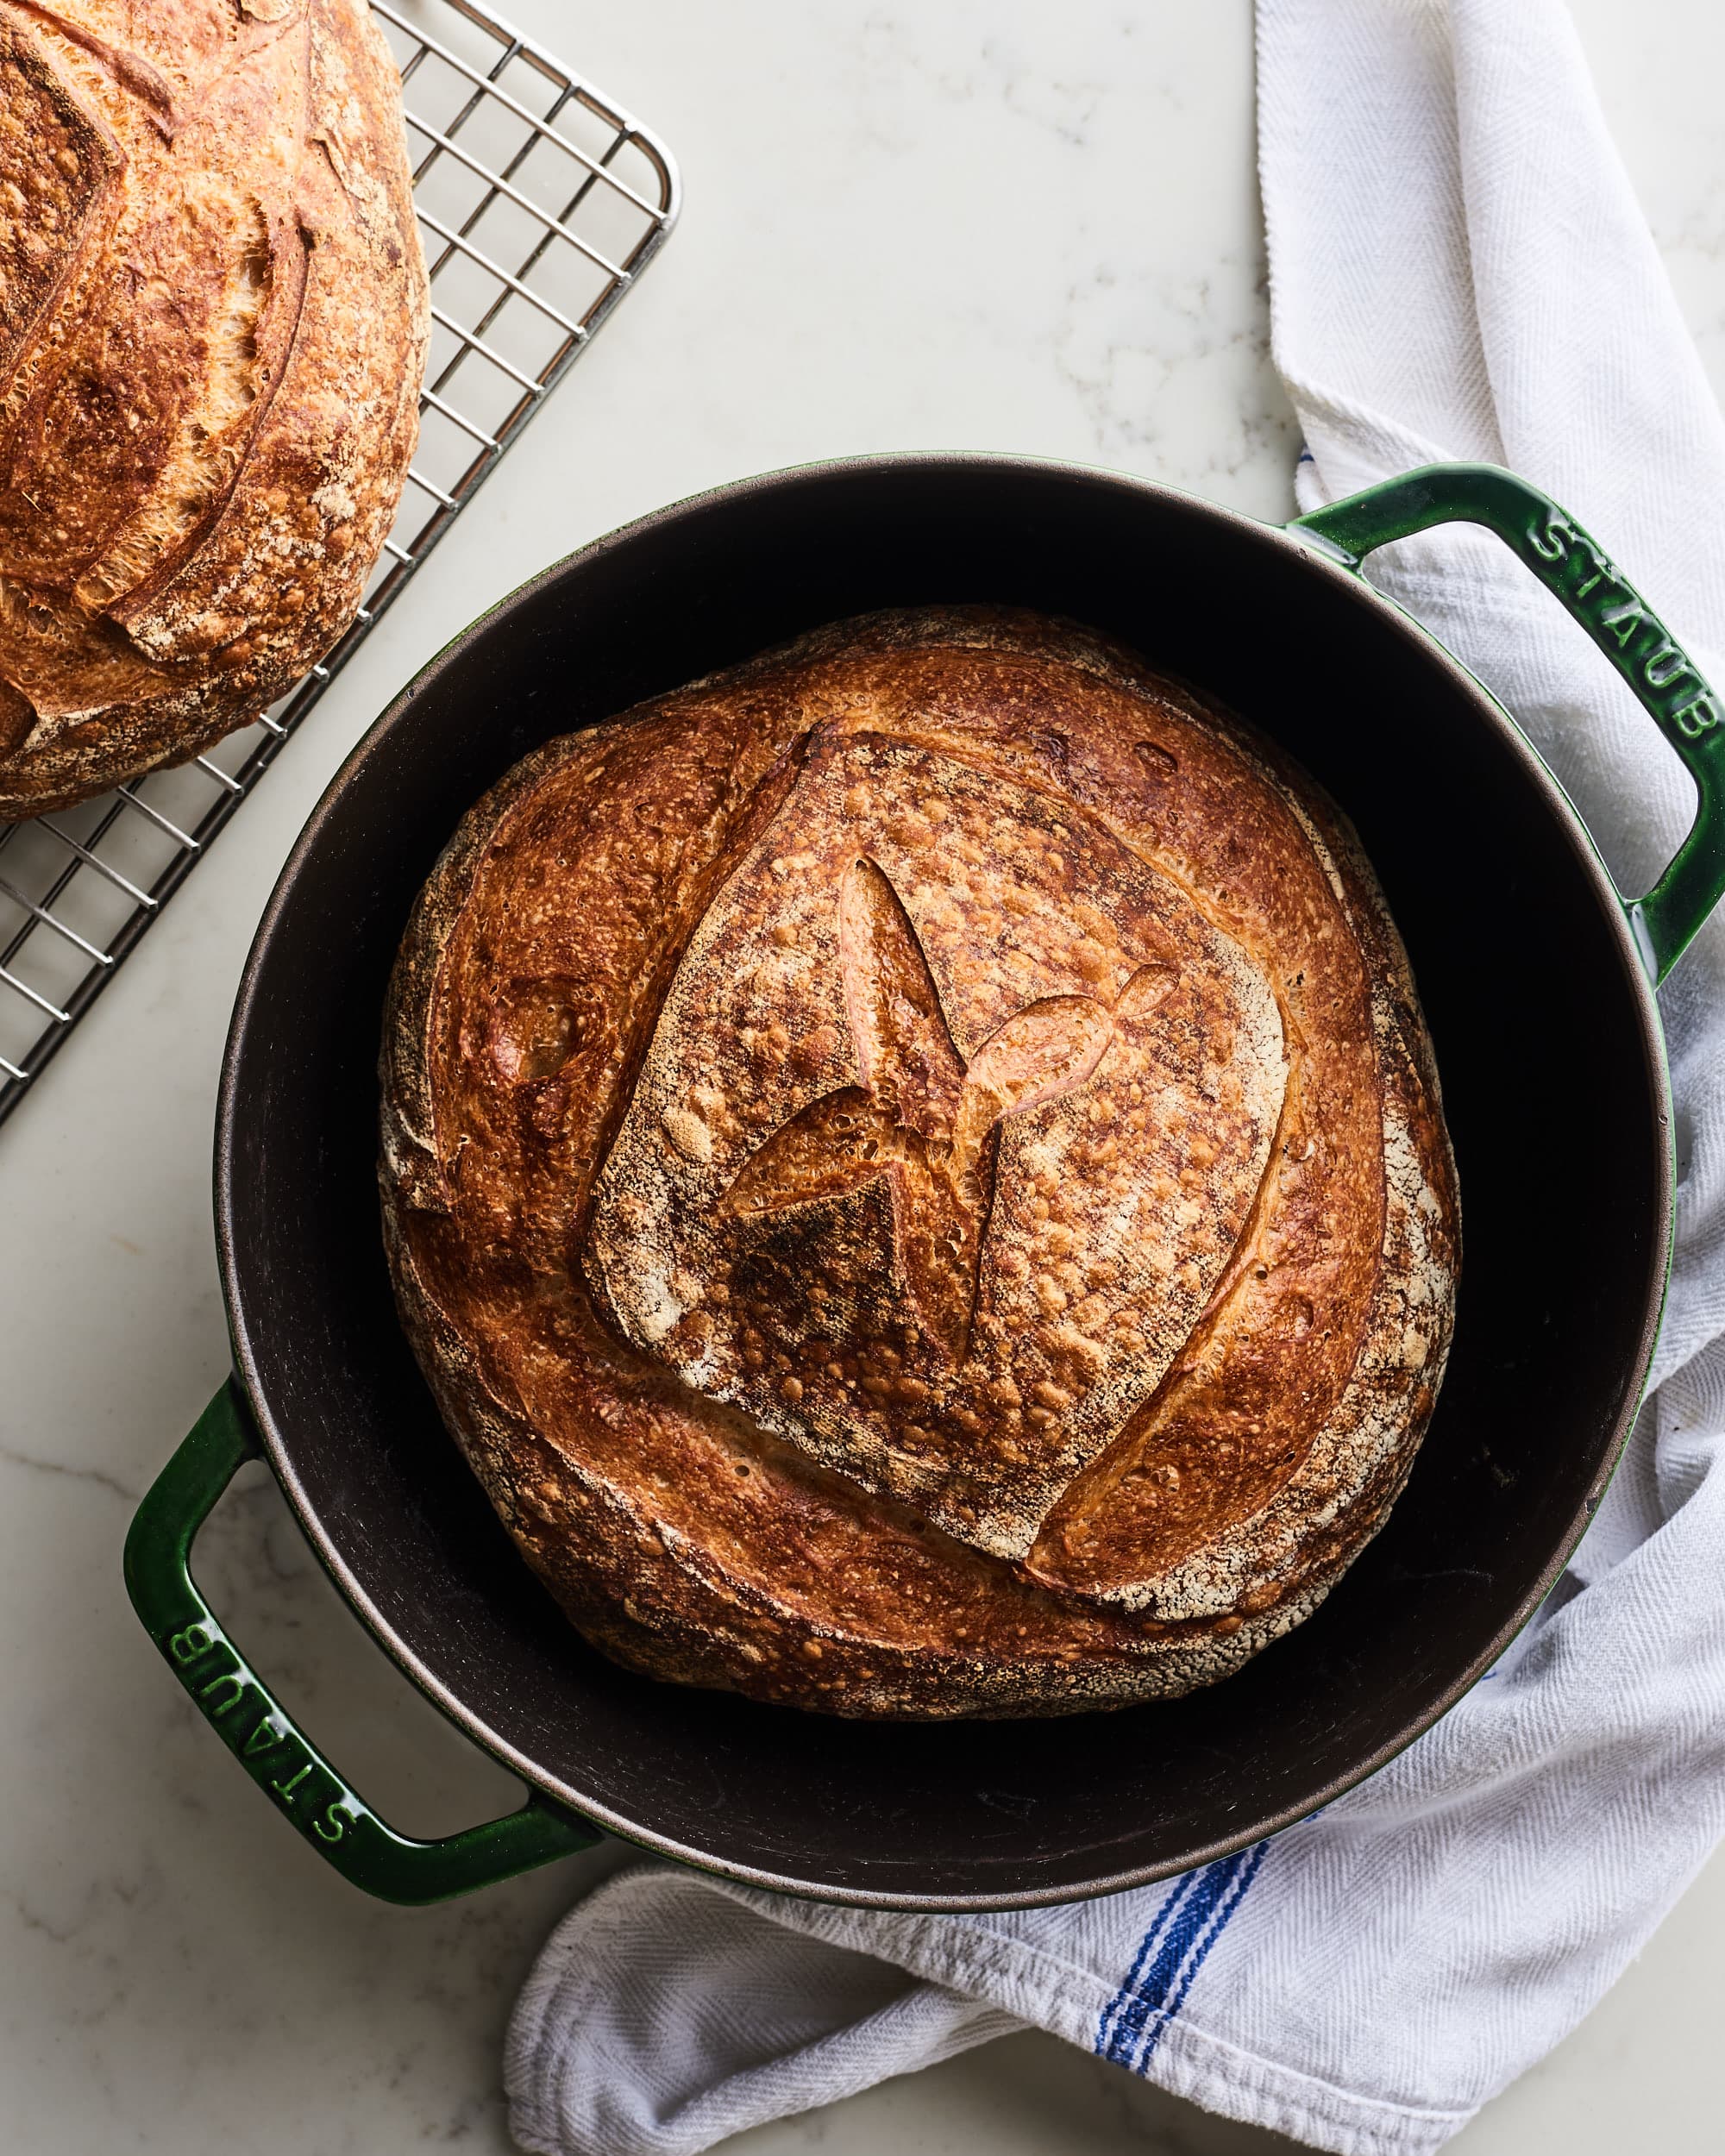 https://cdn.apartmenttherapy.info/image/upload/v1579298796/k/Photo/Recipes/2020-01-How-to-Sourdough-Bread/98665-beautiful-finished-bread-LEAD_How-to-make-sourdough-bread.jpg